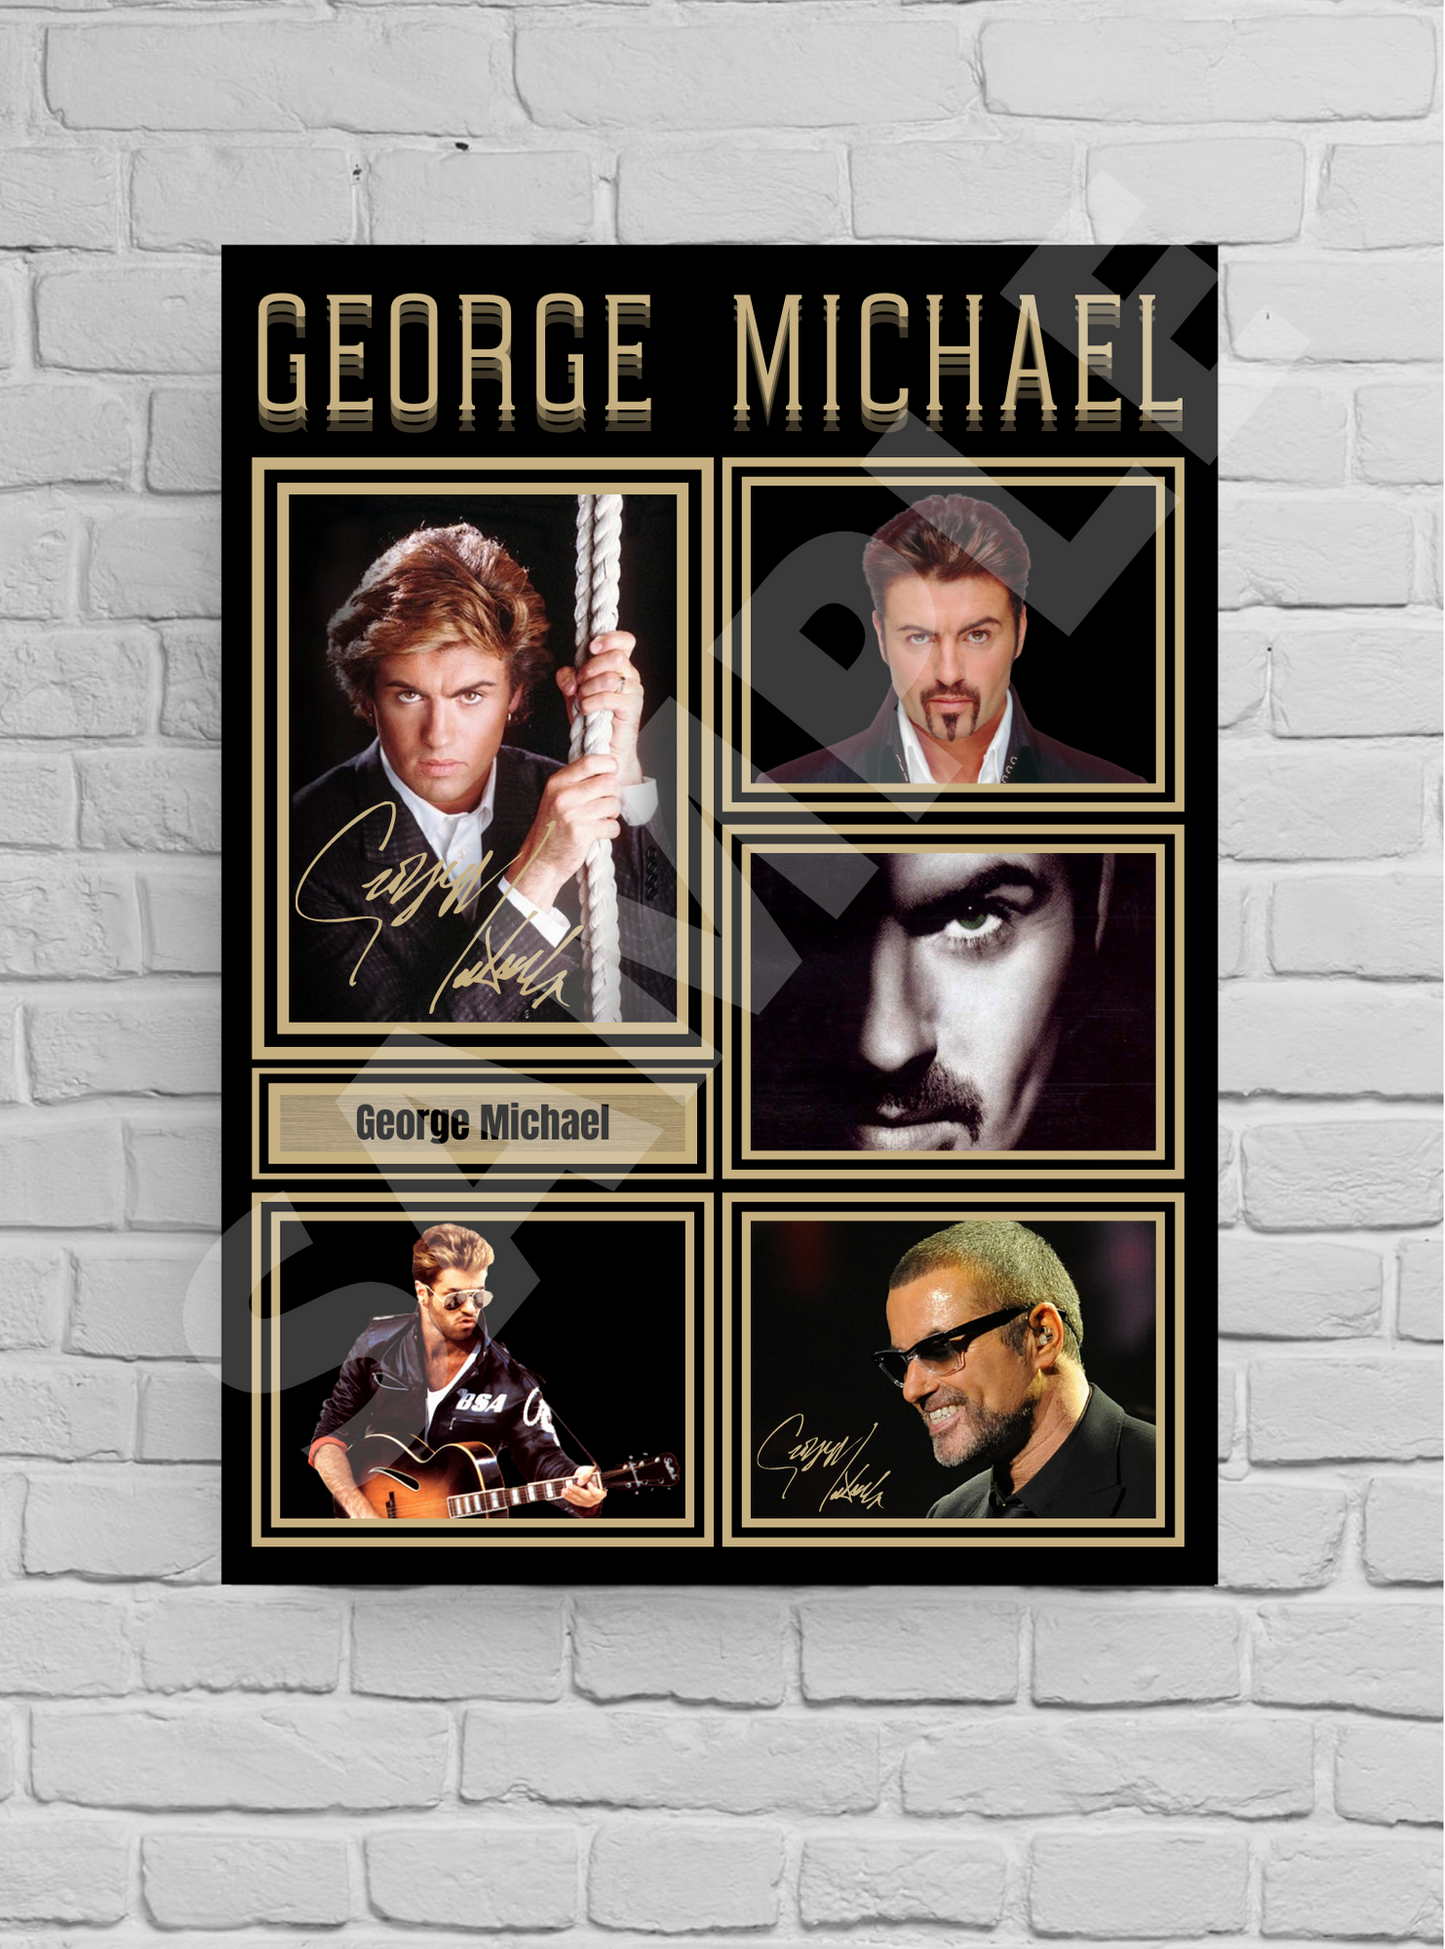 George Michael Collectable/Memorabilia/ signed print #118